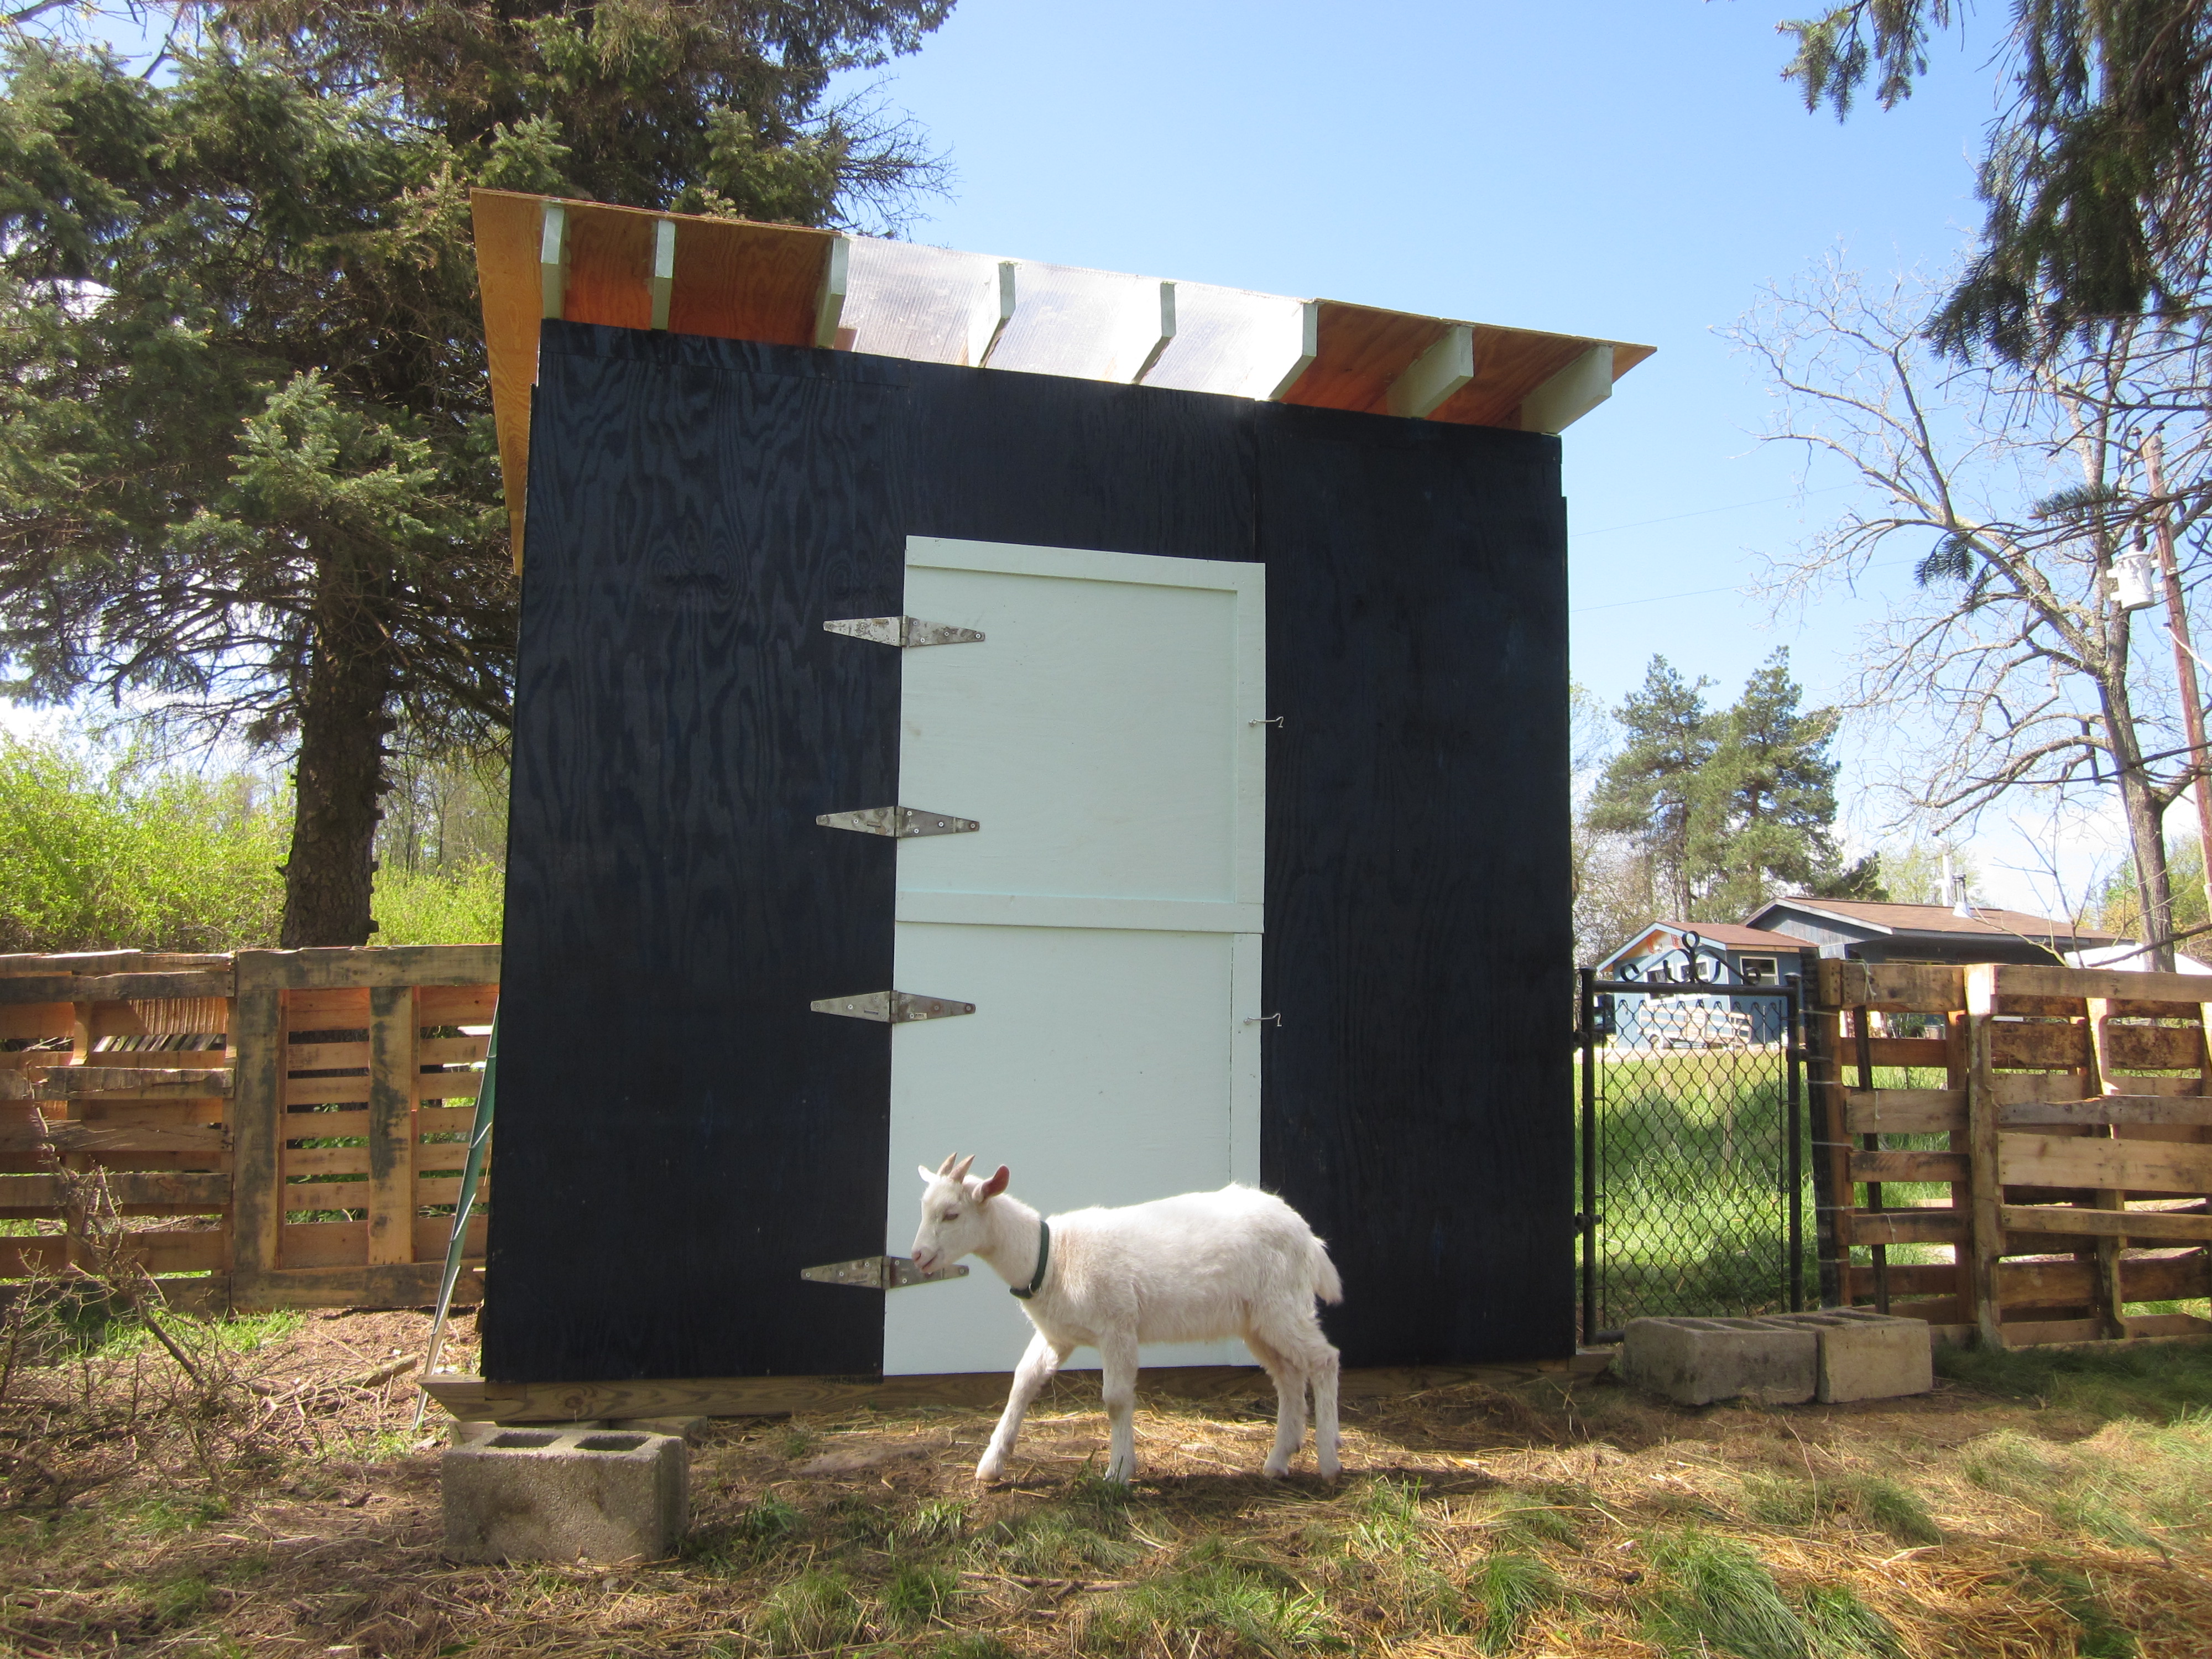 Mobile goat barn – a “maaah”d endeavor